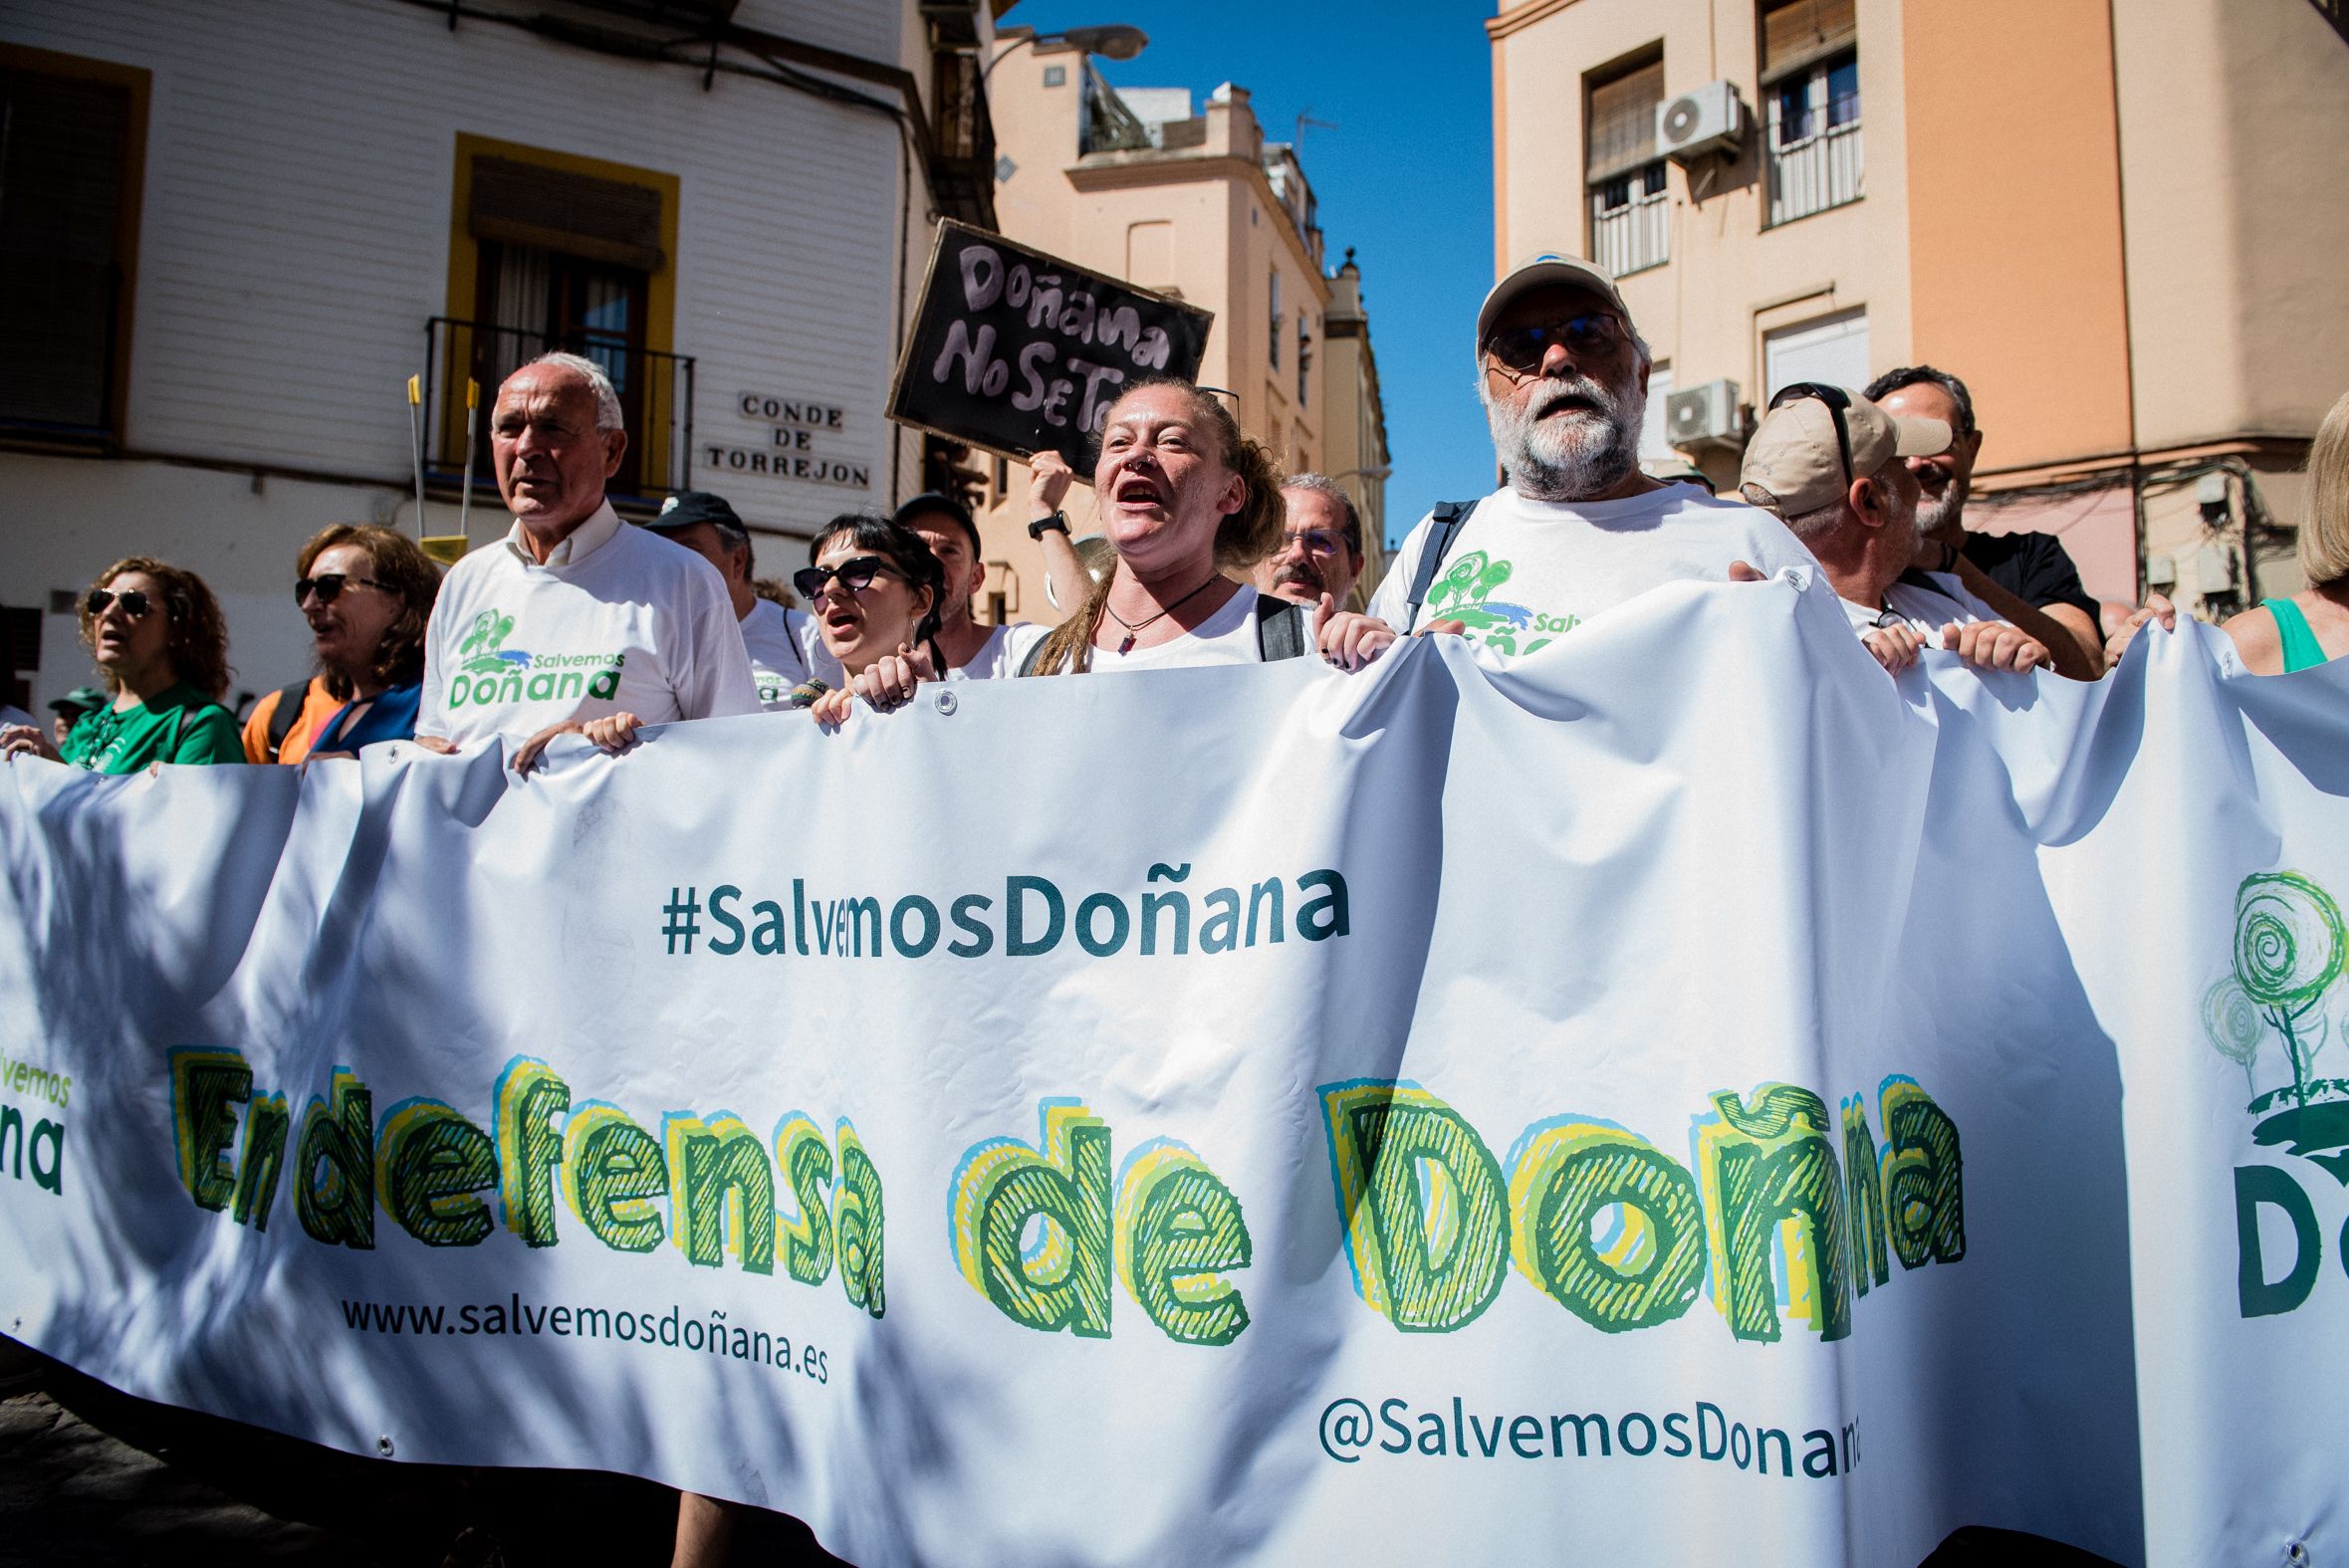 Manifestación en defensa de Doñana.